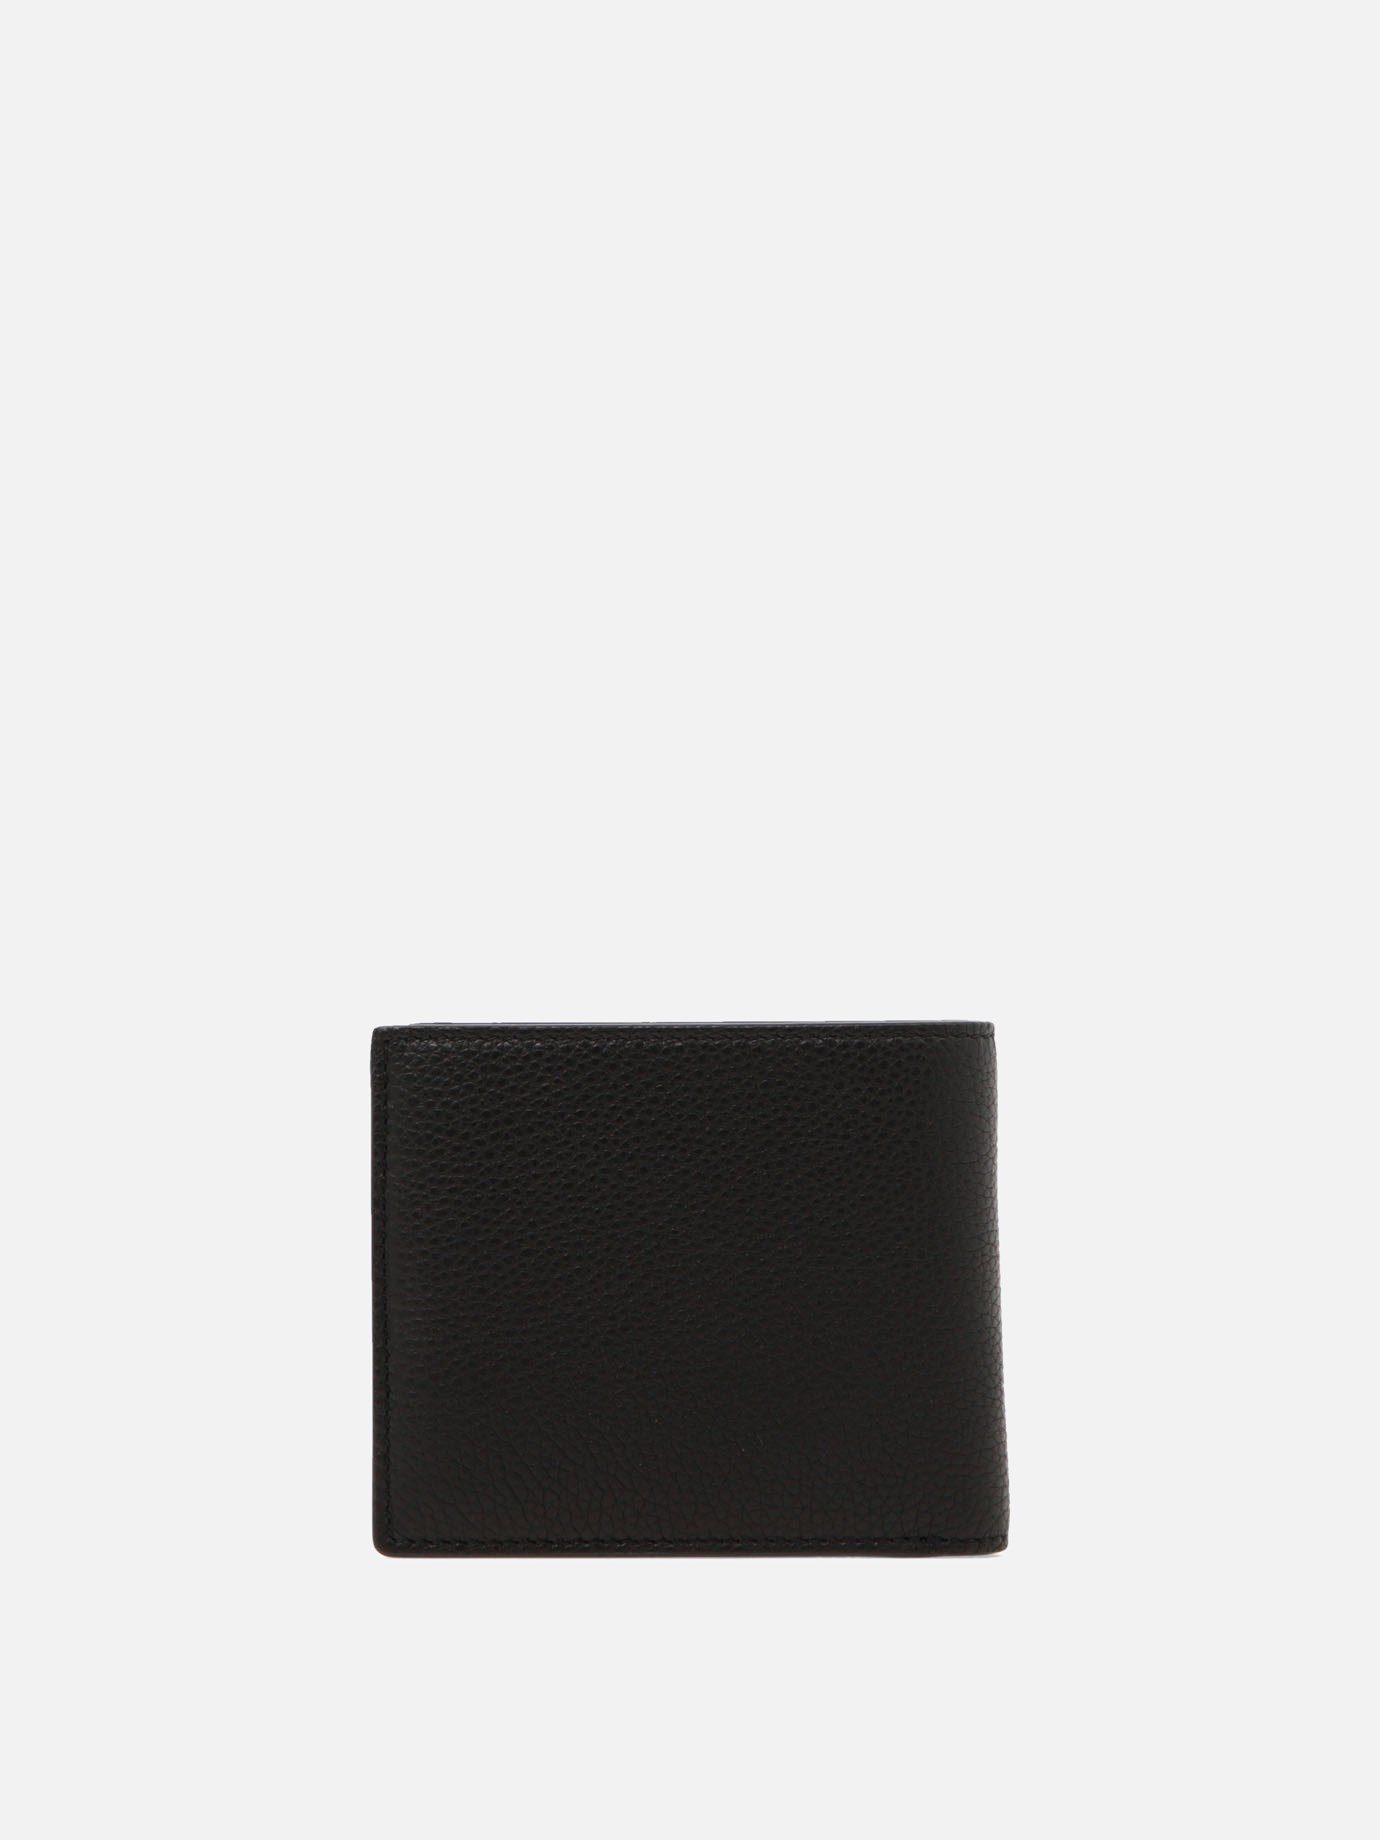  Bi-Fold  wallet by Tom Ford